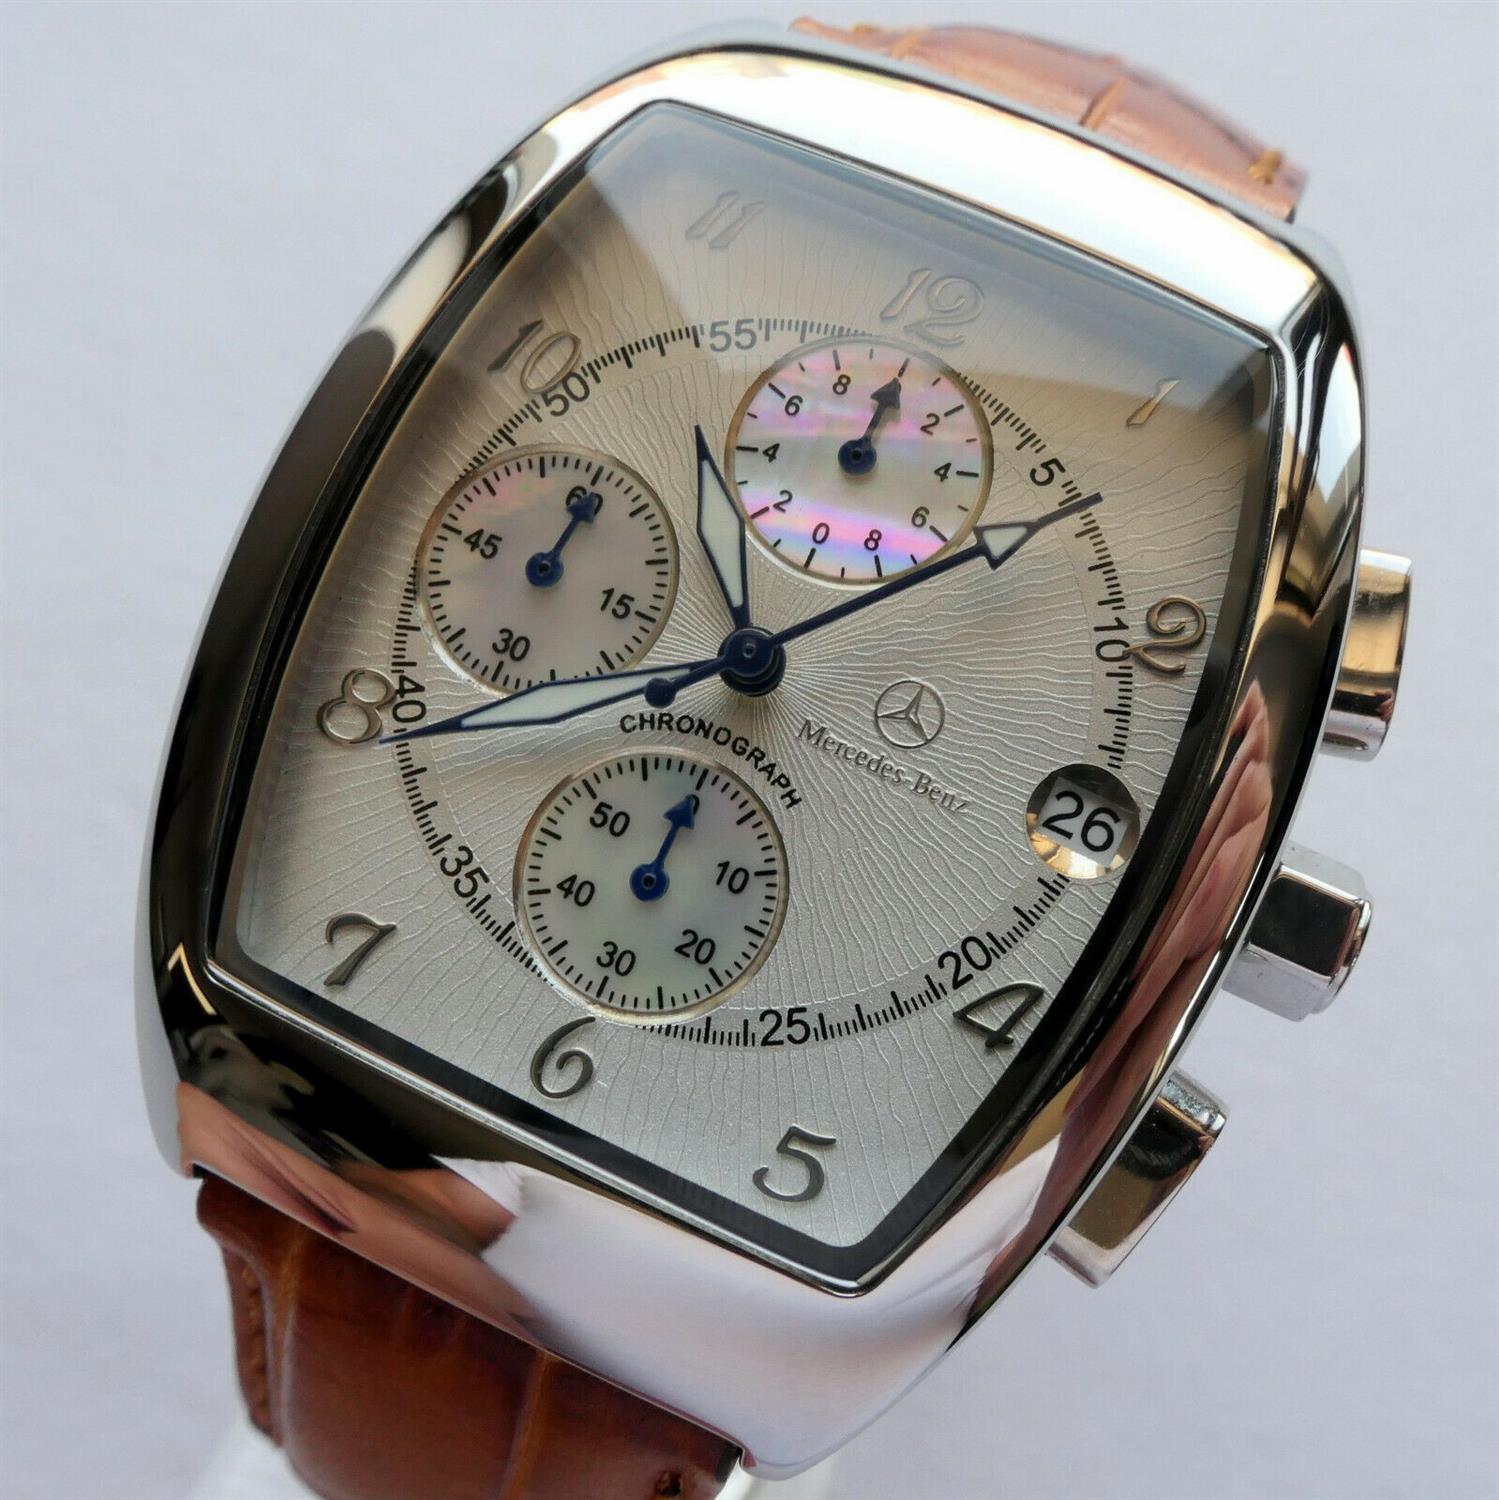 A Superb Mercedes-Benz Art-Deco Style Gentleman’s Chronograph Wristwatch - Image 7 of 9